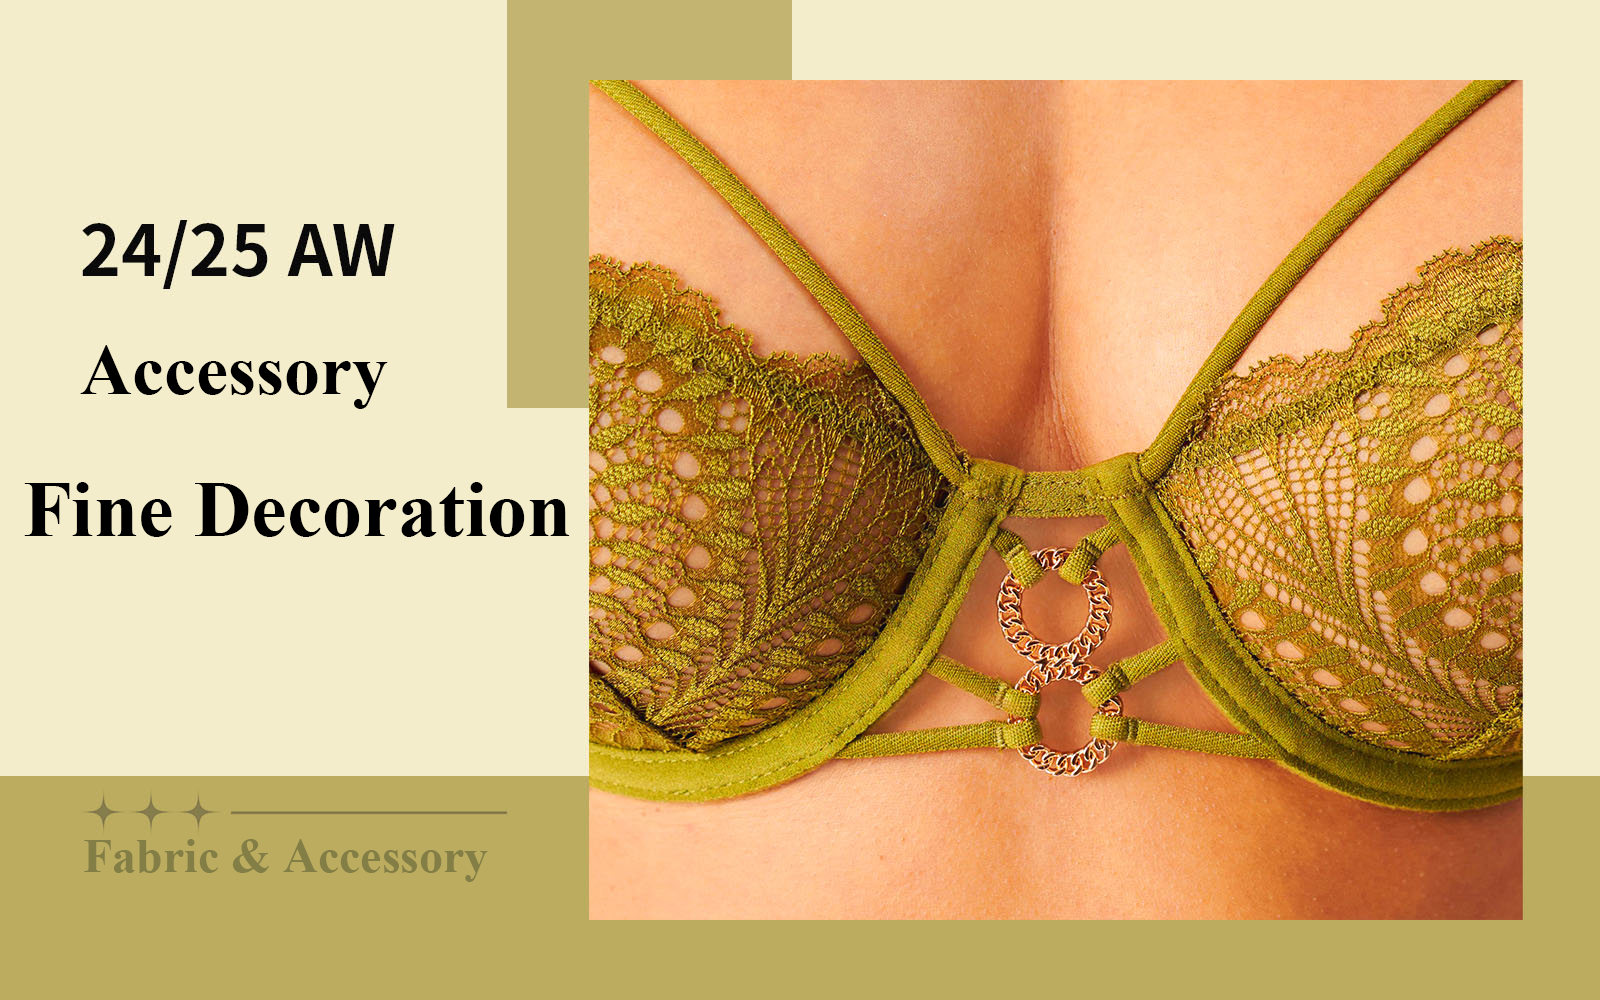 Fine Decoration -- The Accessory Trend for Women's Underwear